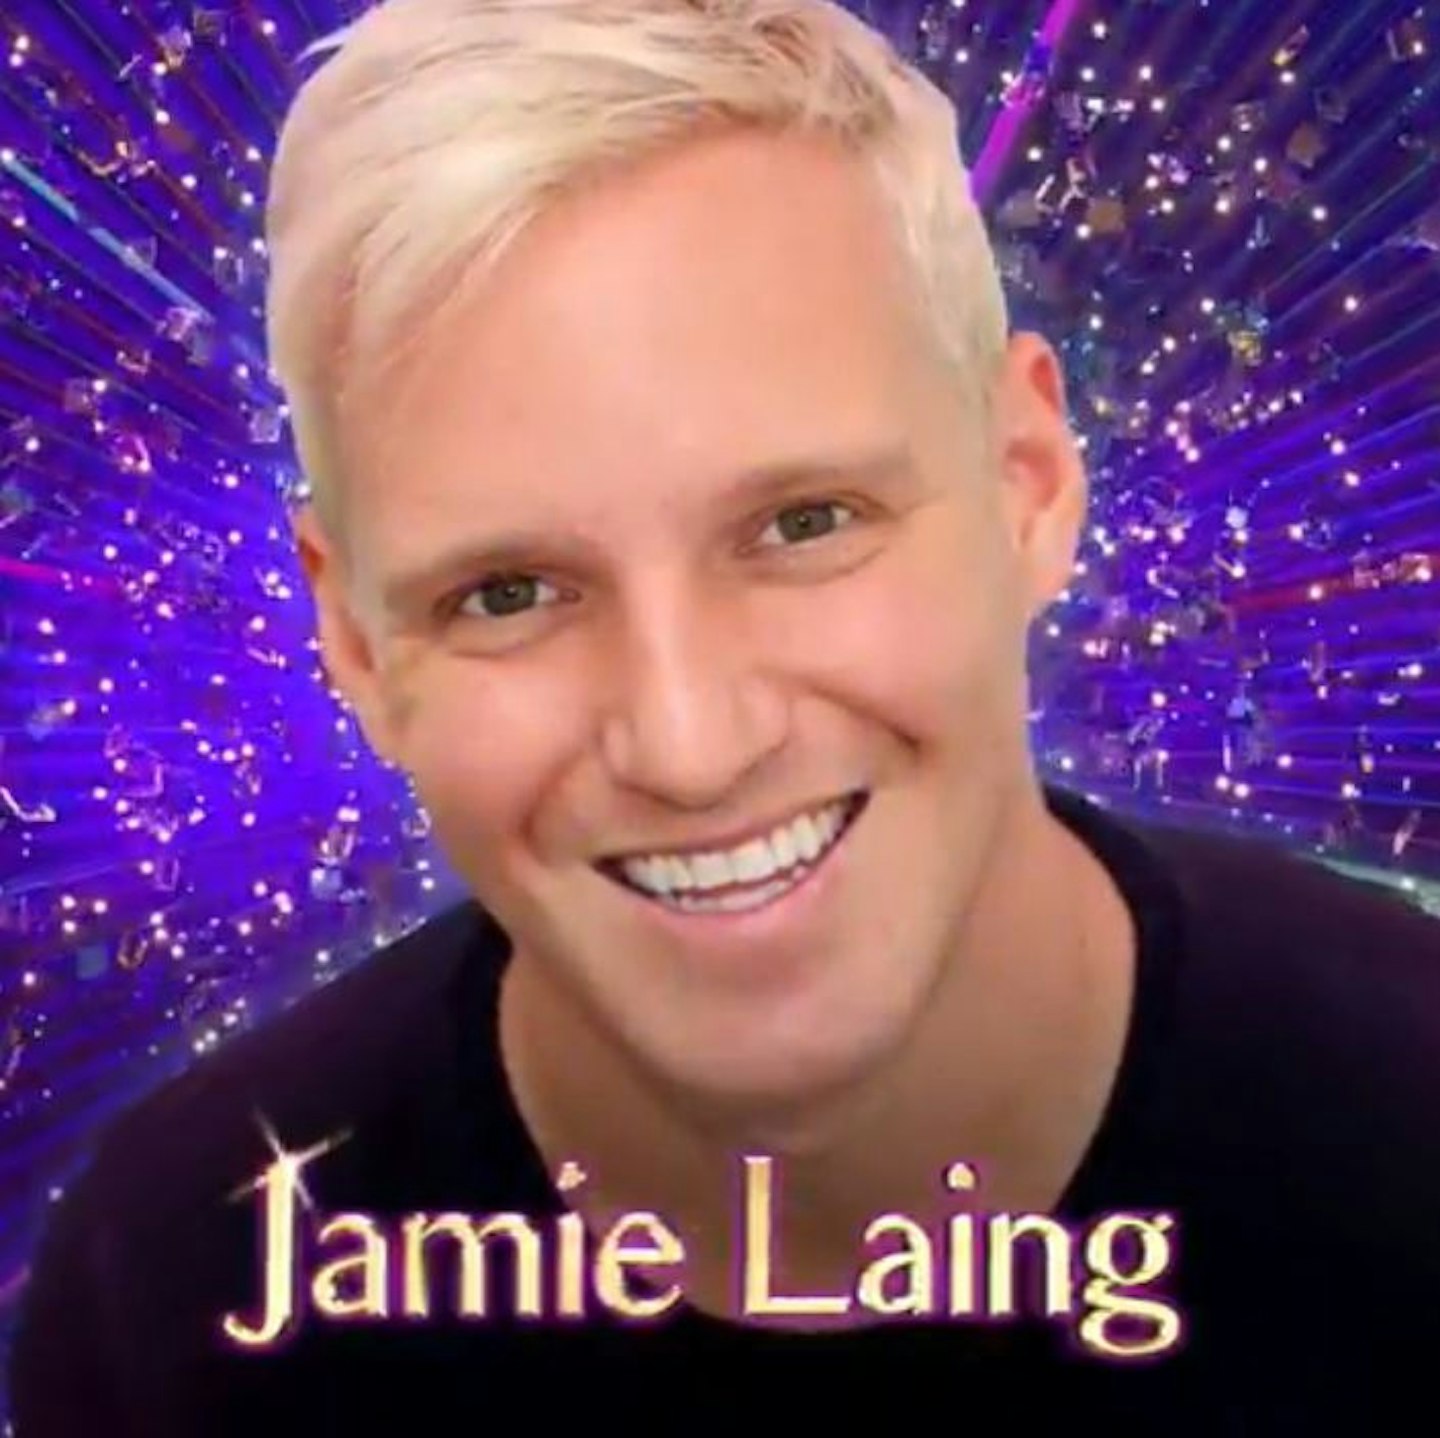 Jamie Laing